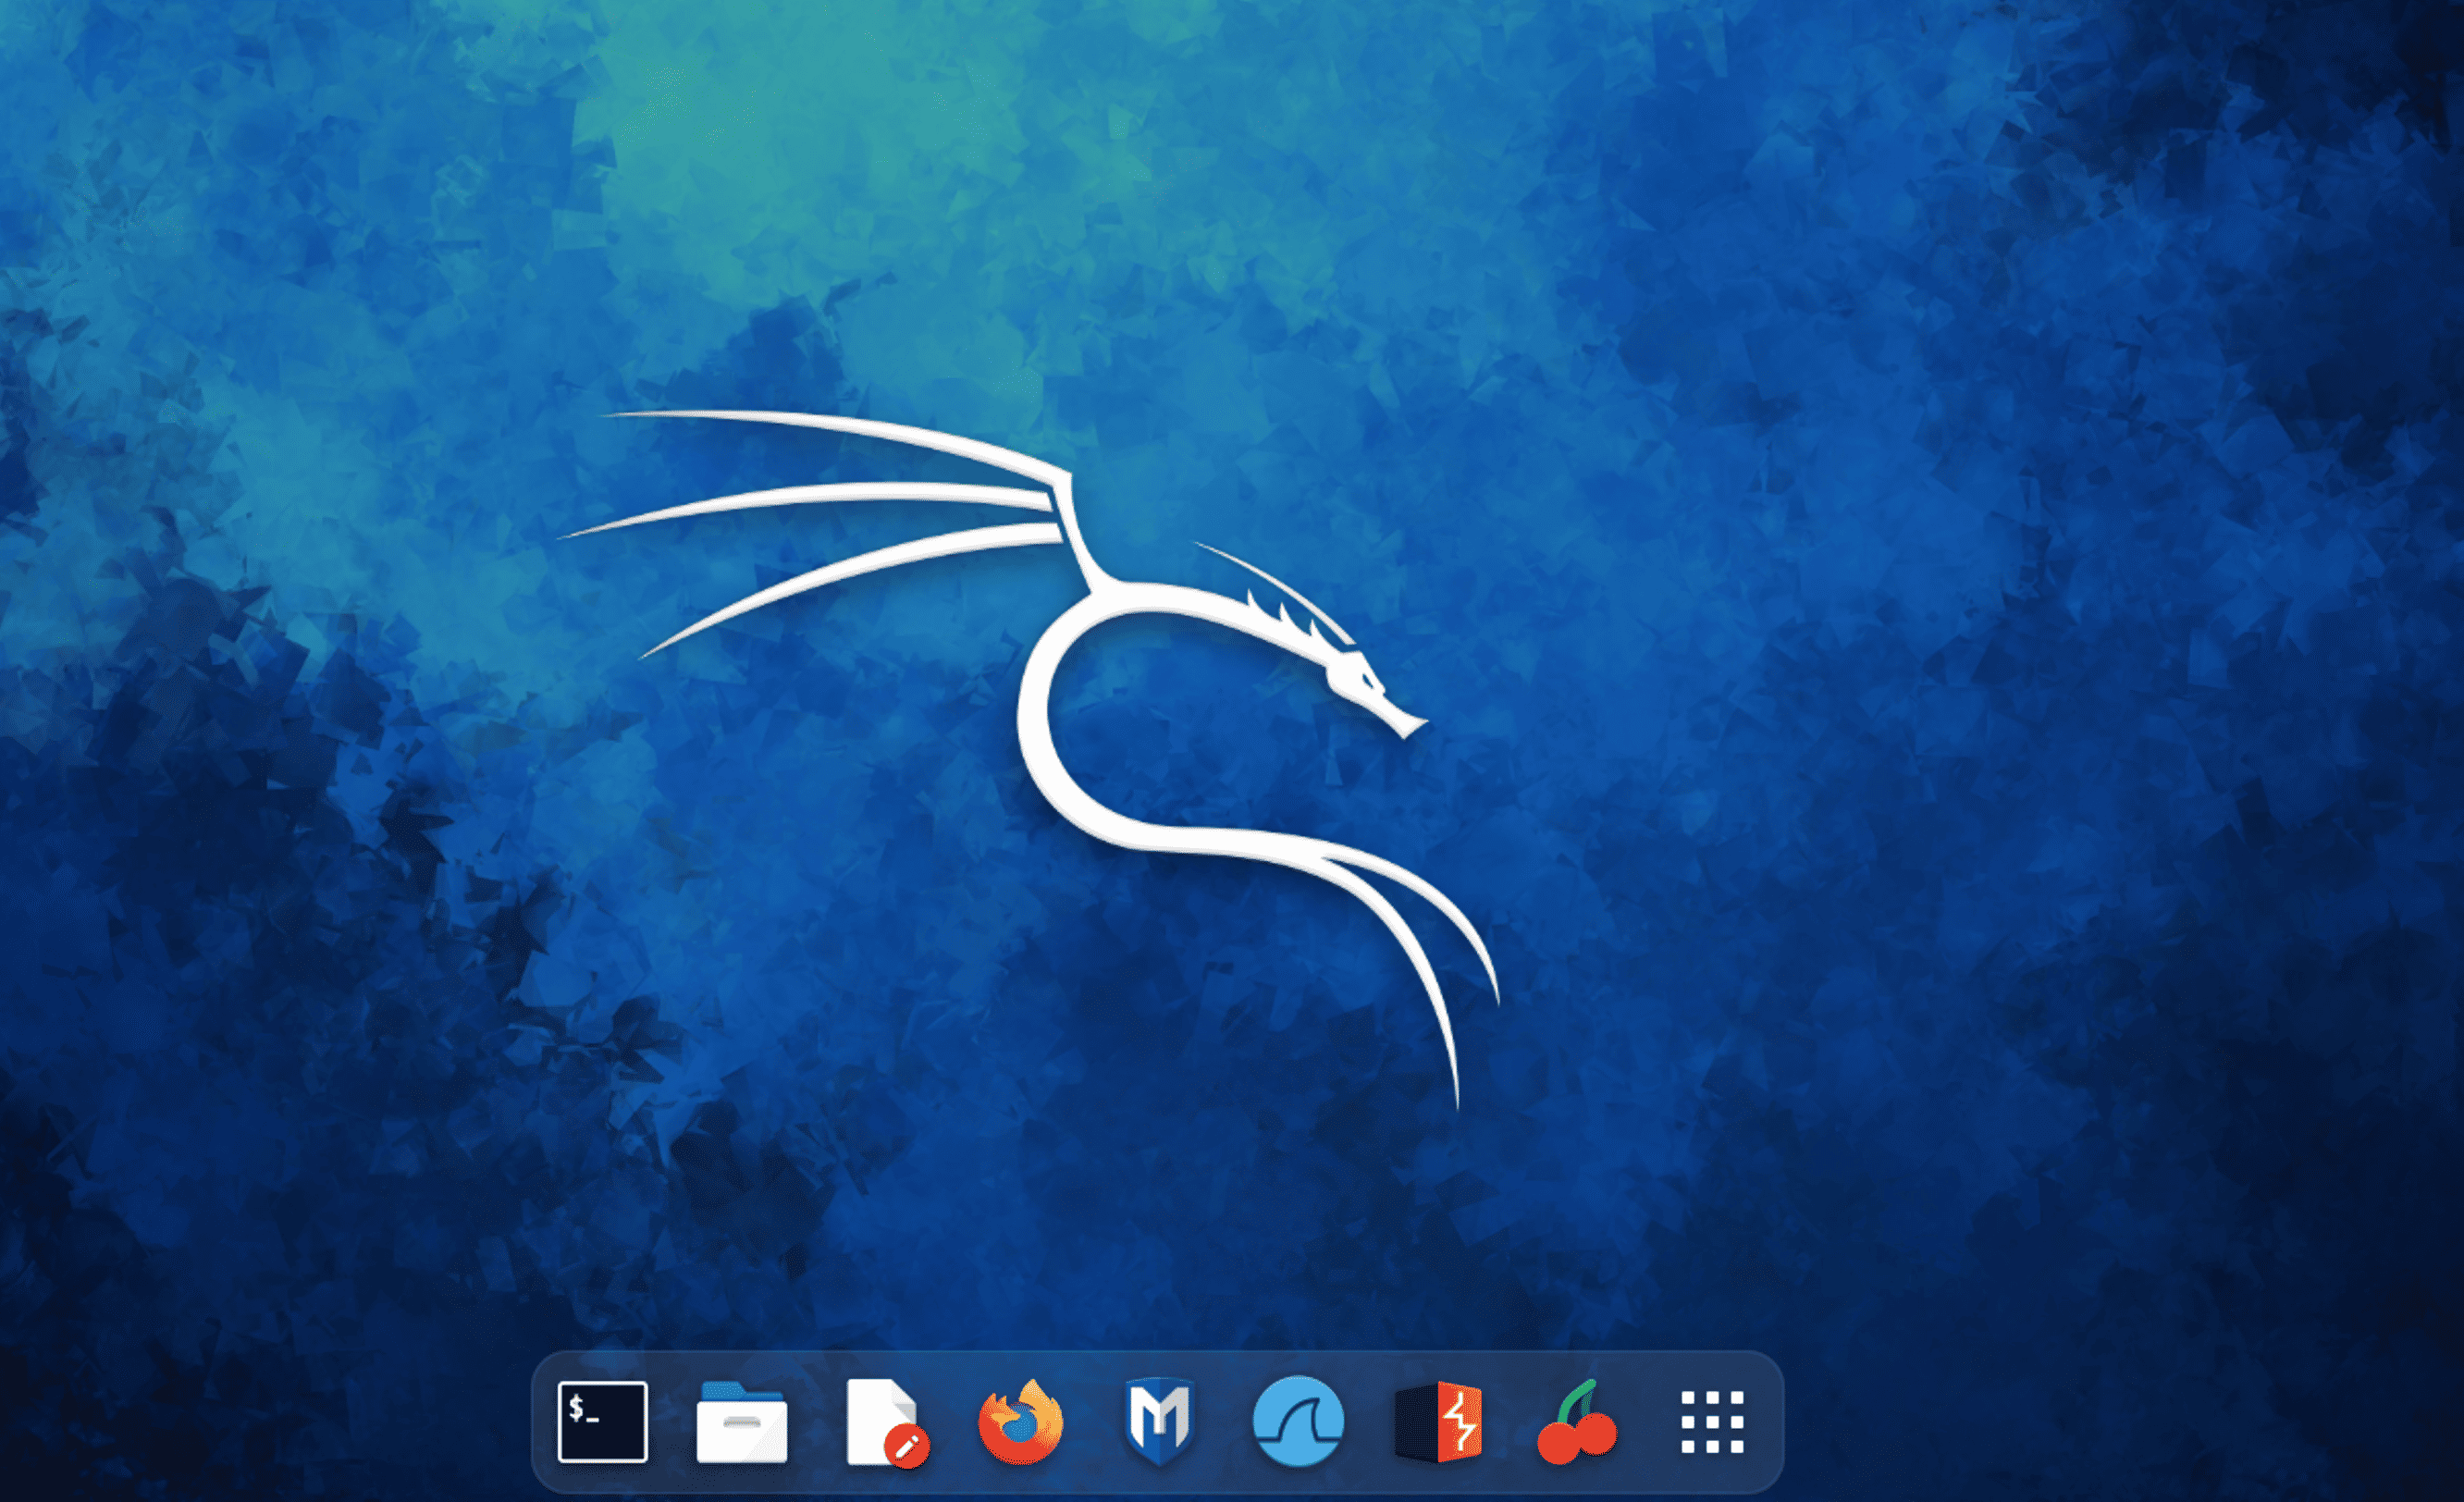 My Kali Linux Setup, things that I do / modify after installing Kali Linux.